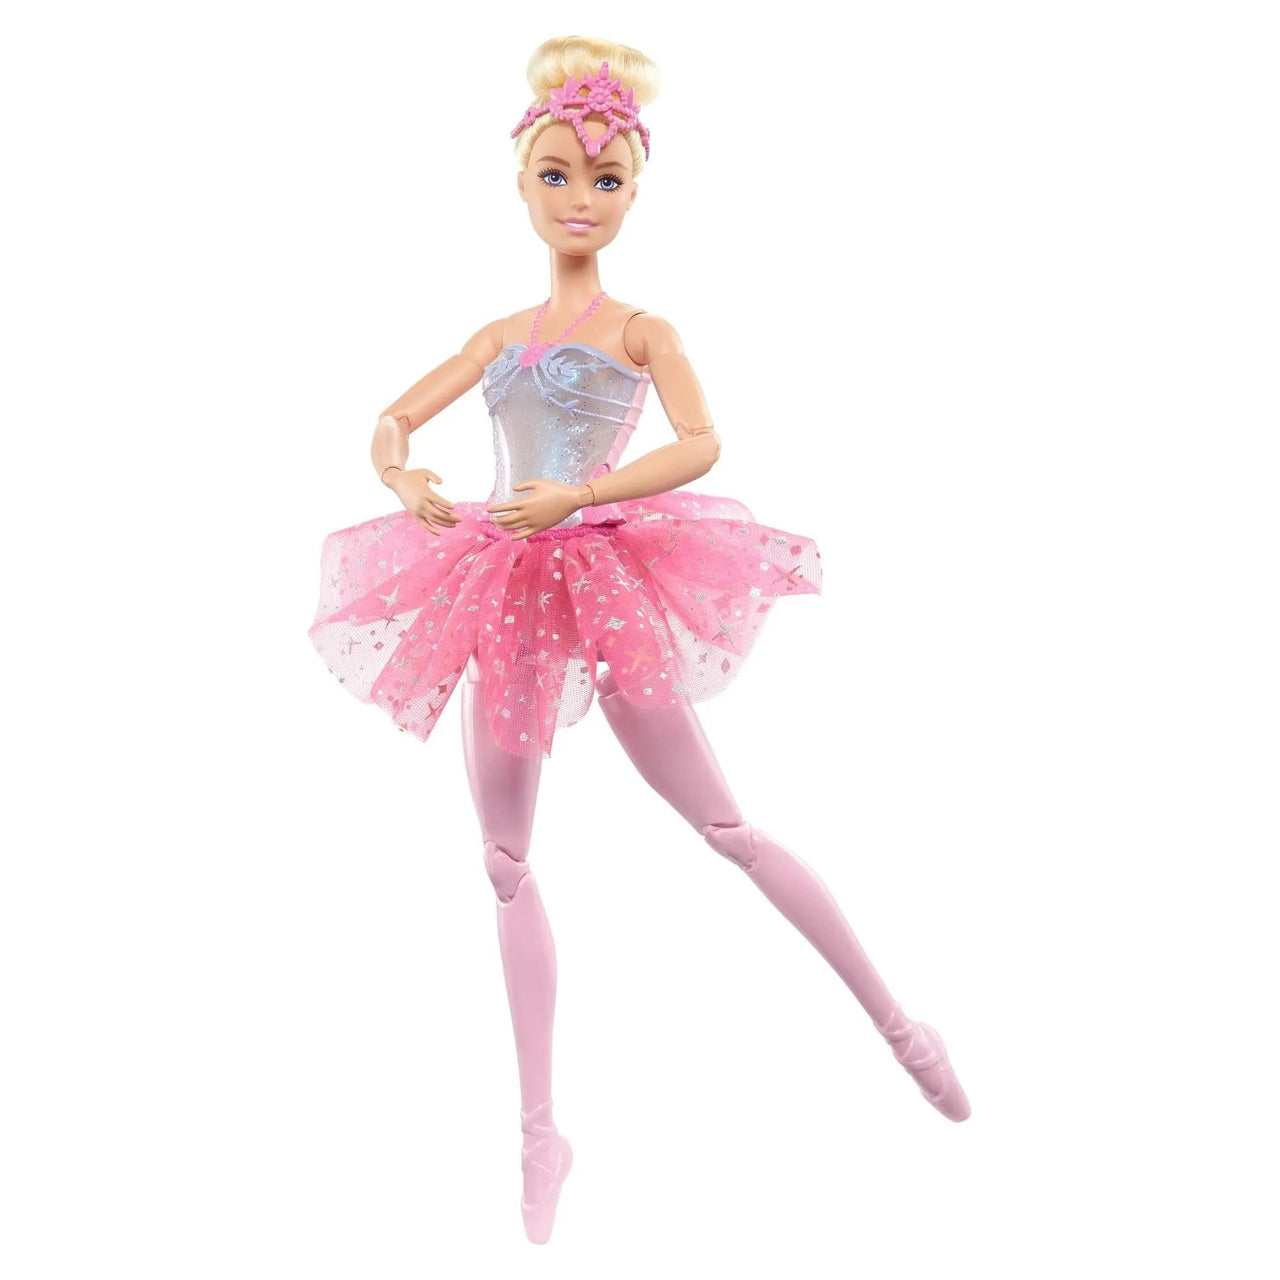 Barbie Dreamtopia Twinkle Lights Ballerina Doll Barbie